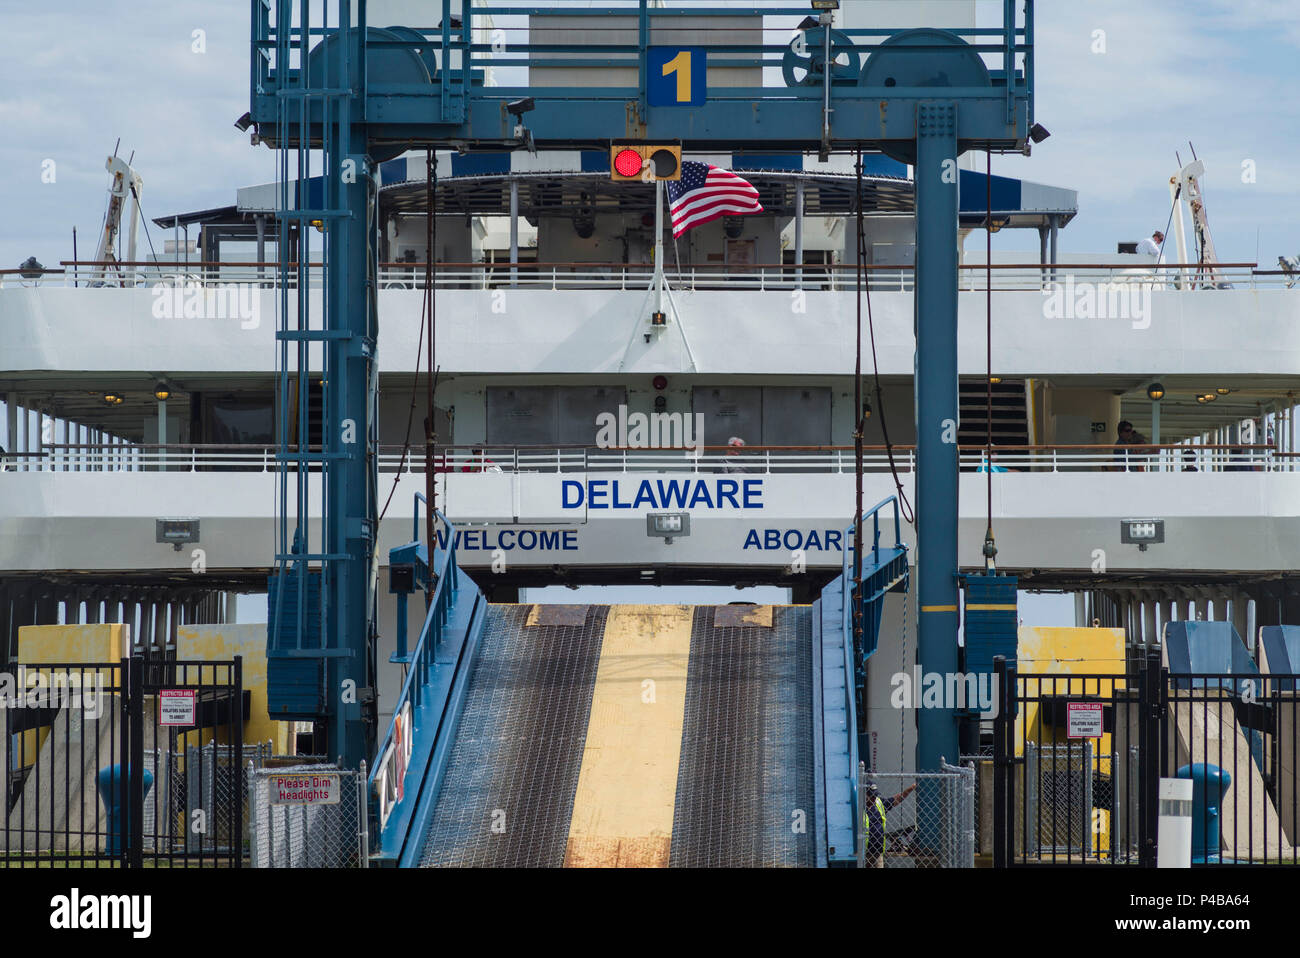 USA, Florida, Lewes, an Bord der Lewes, DE nach Cape May, NJ Fähre Stockfoto